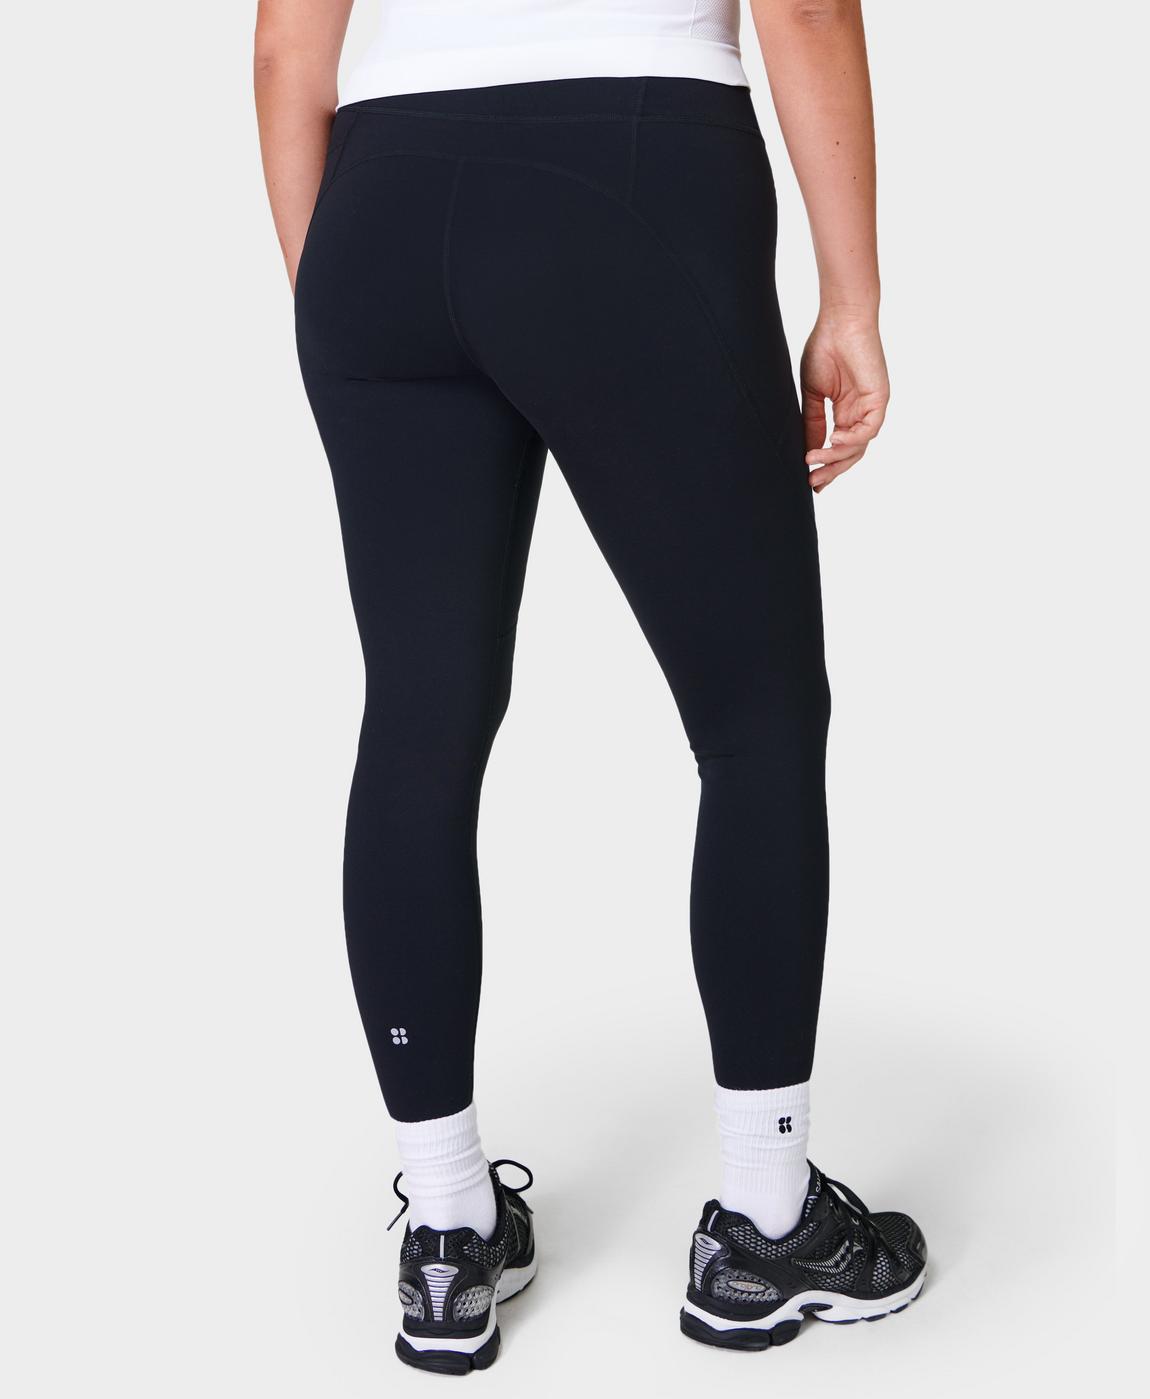 Athletic Works Women's Buttery Soft Leggings, 27 Inseam, Sizes XS-XXXL 